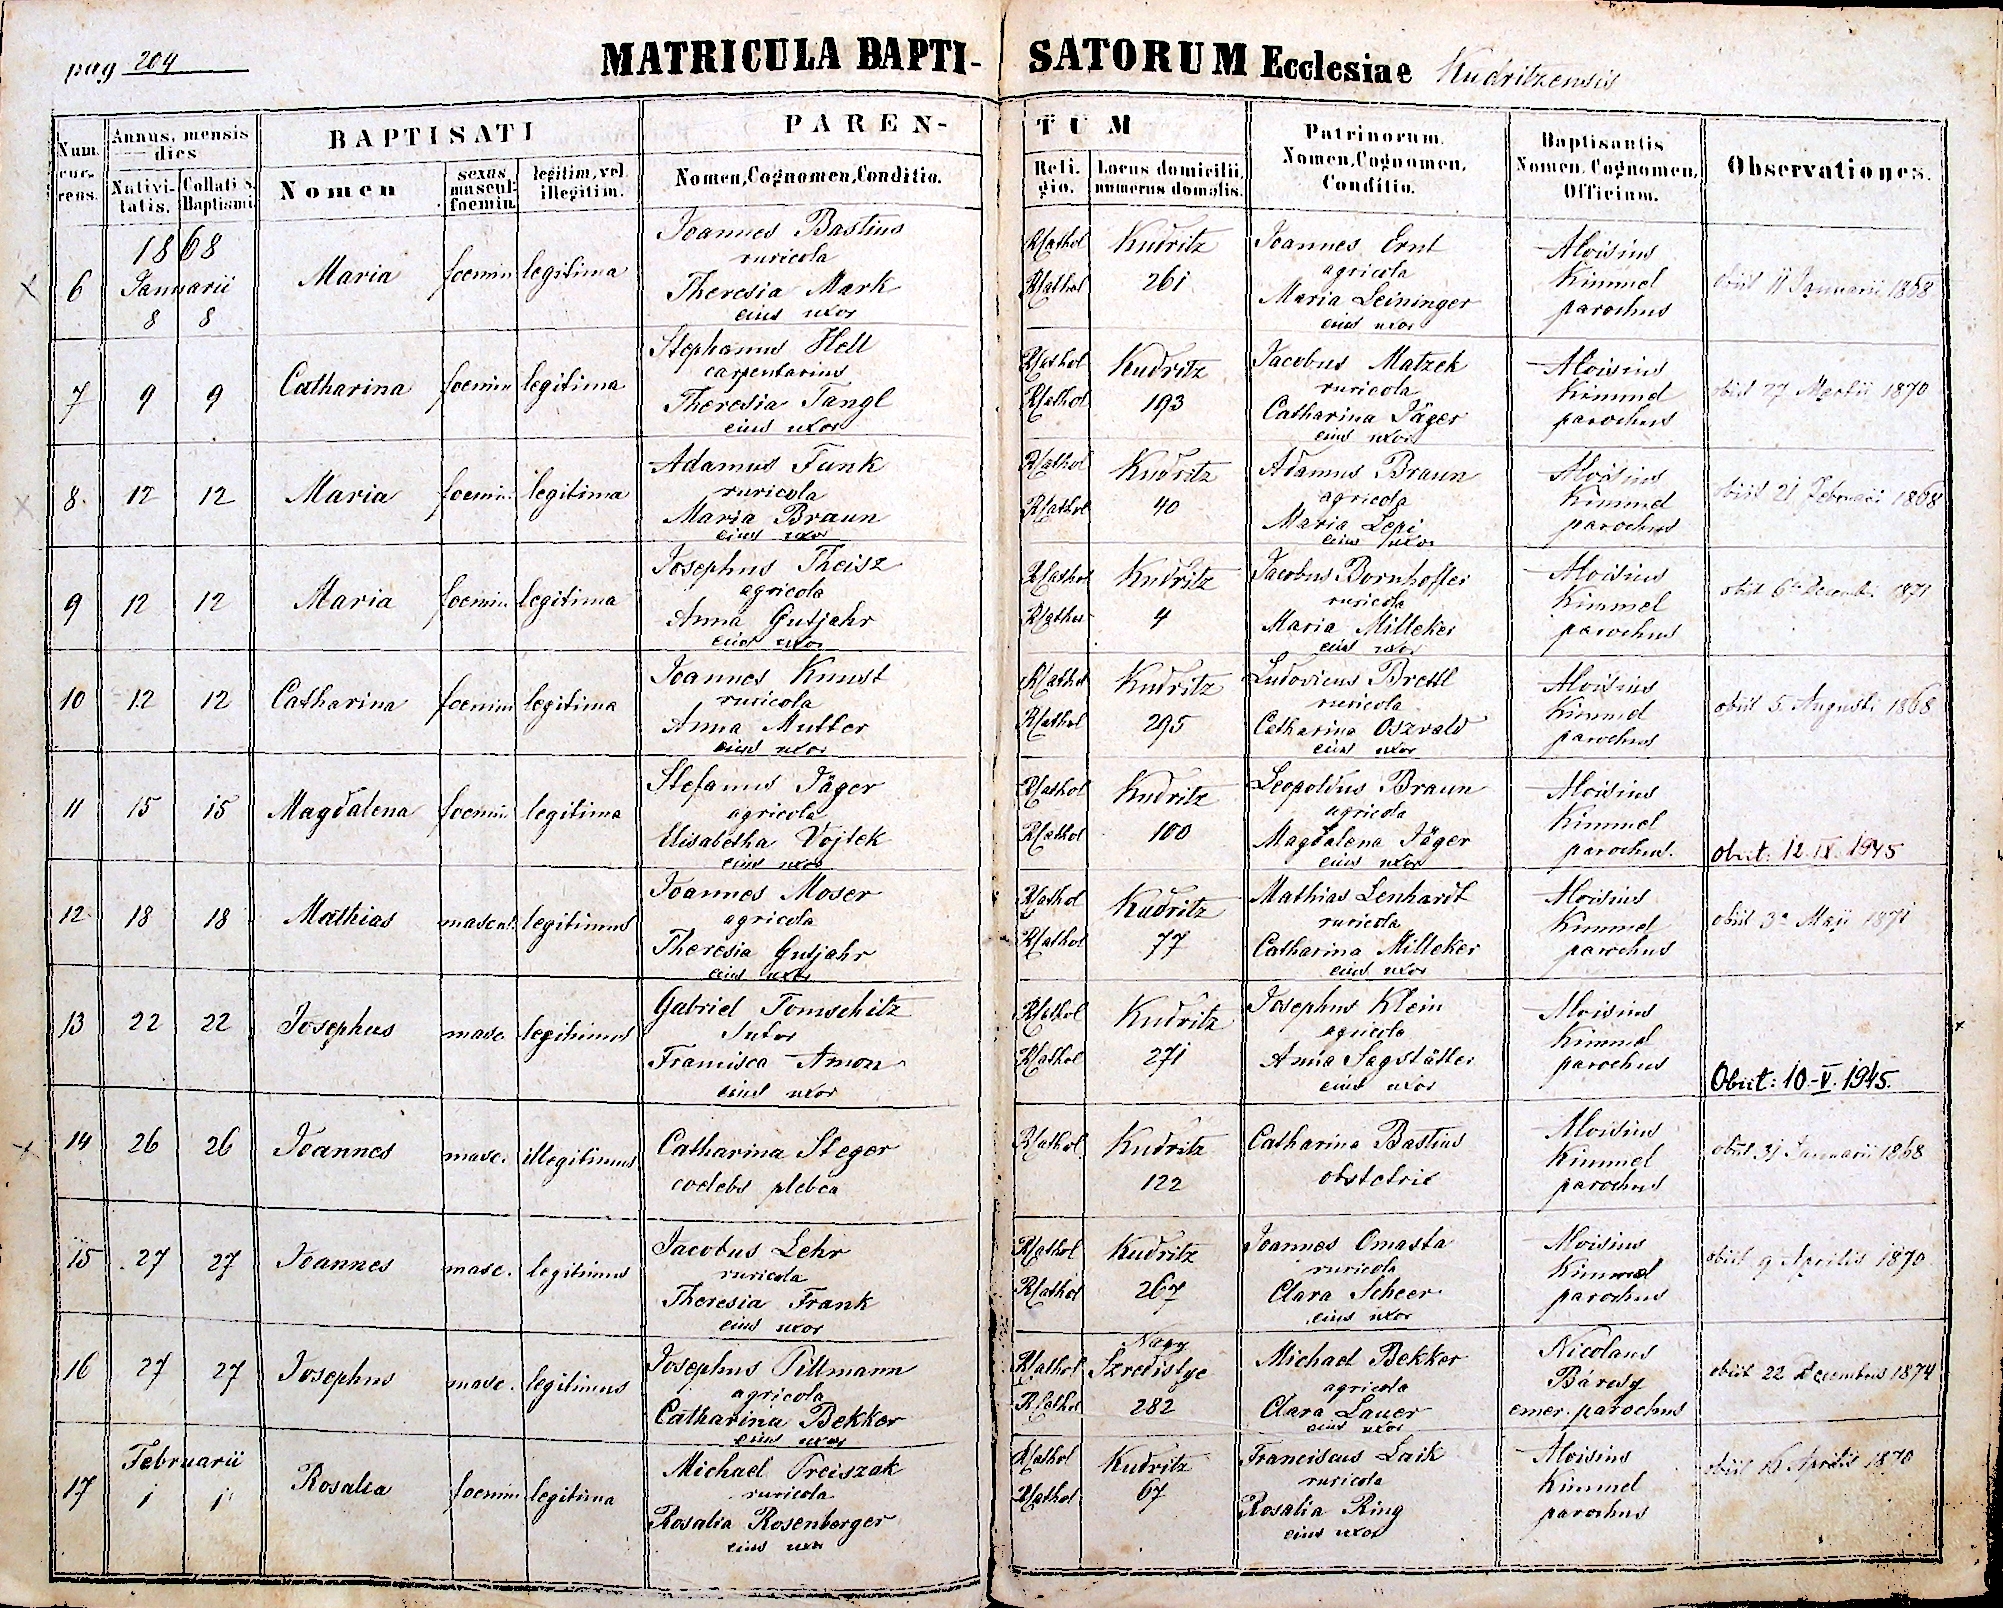 images/church_records/BIRTHS/1852-1870B/204